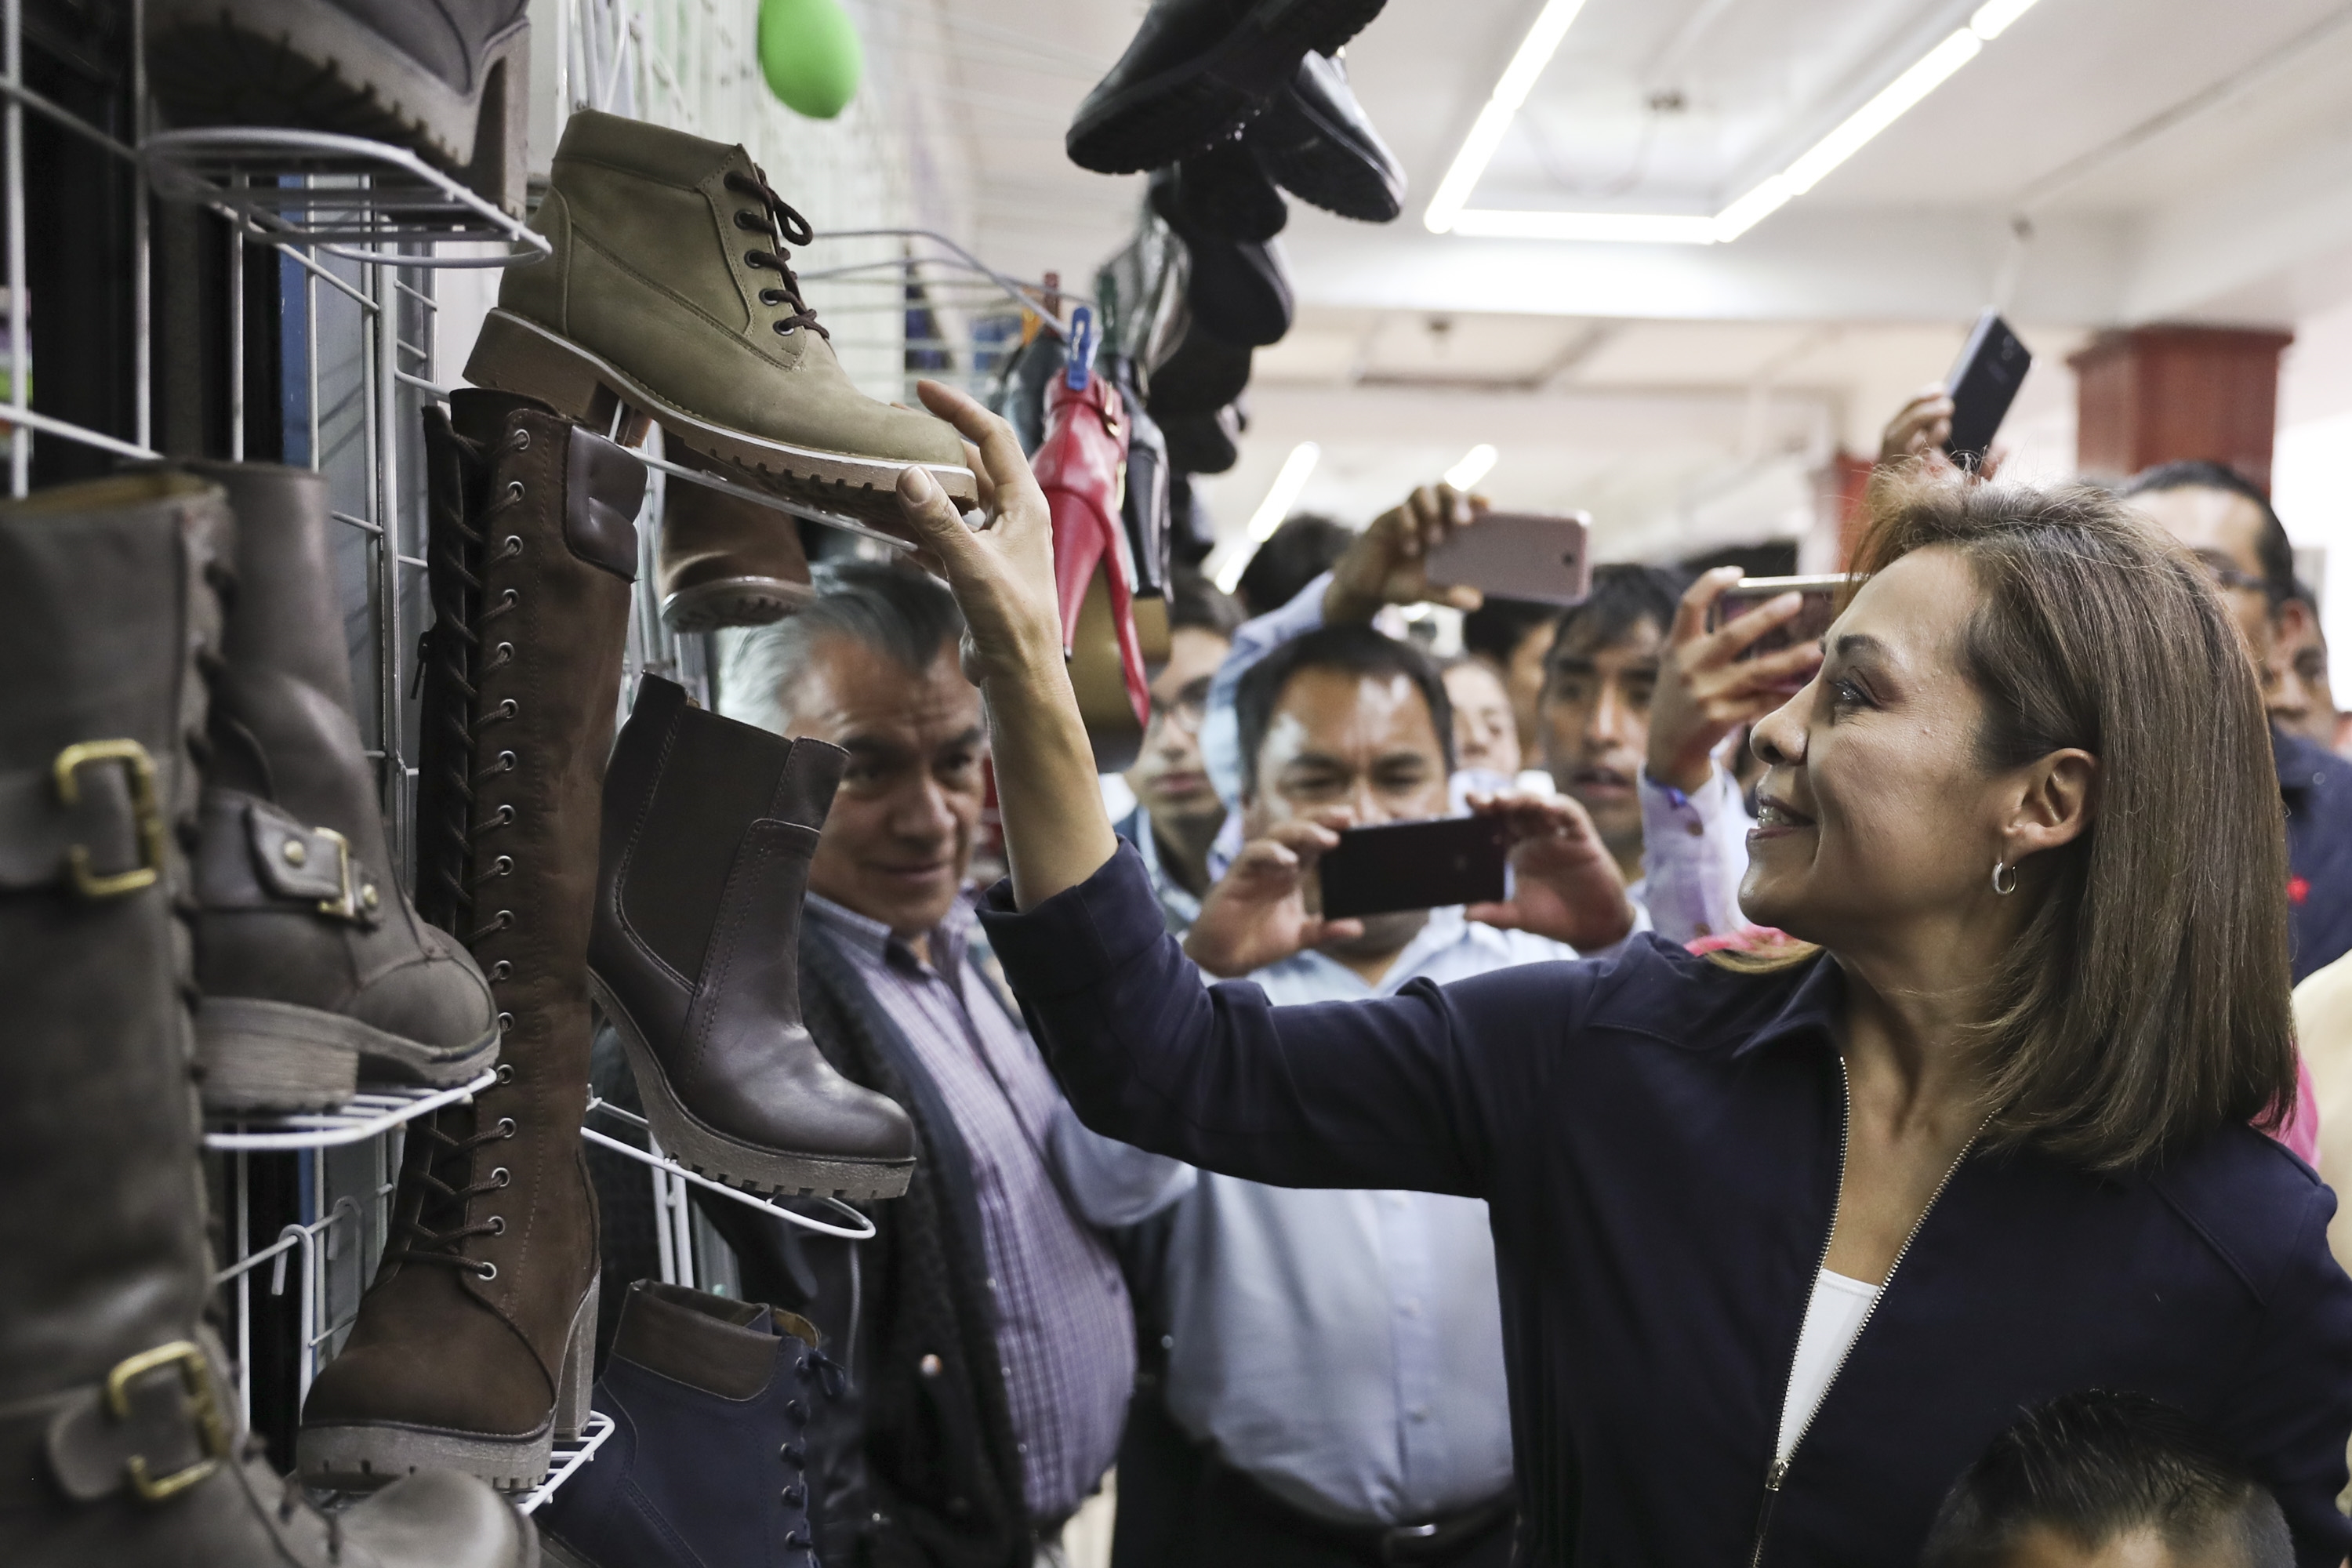 La candidata a la gobernatura del Estado de Mexico, Josefina Vazquez Mota acudio a San Mateo Atenco para realizar actividades proselitistas. (Cristopher Rogel Blanquet/ EL UNIVERSAL)